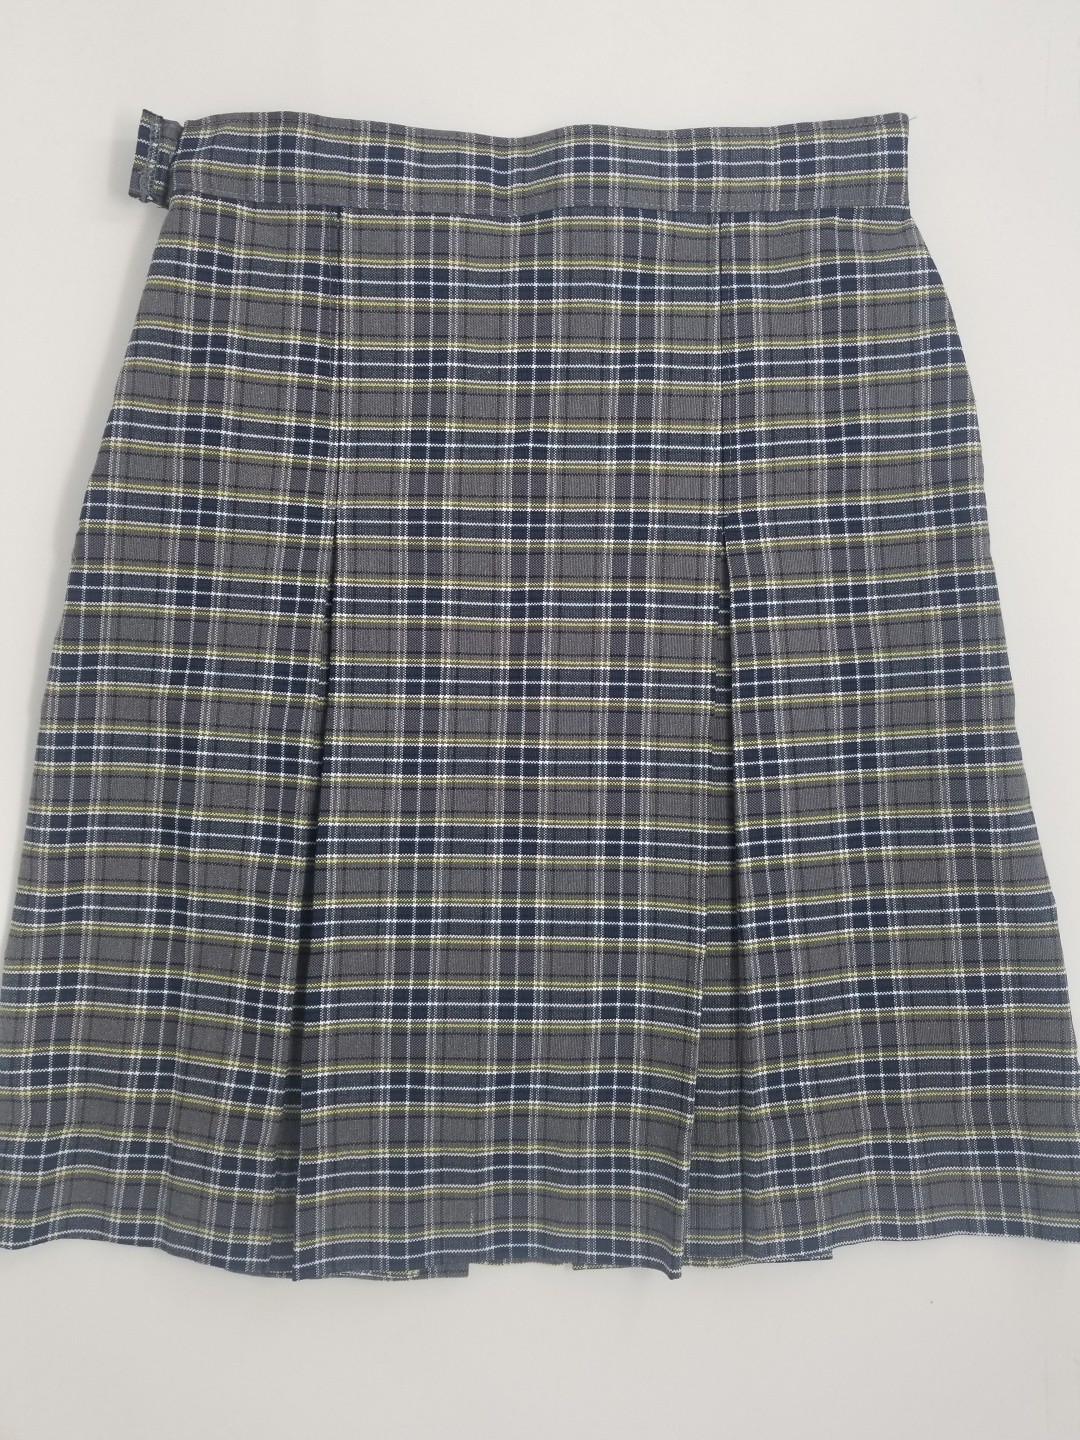 Box Pleat Skirt- Style 48-Plaid 70